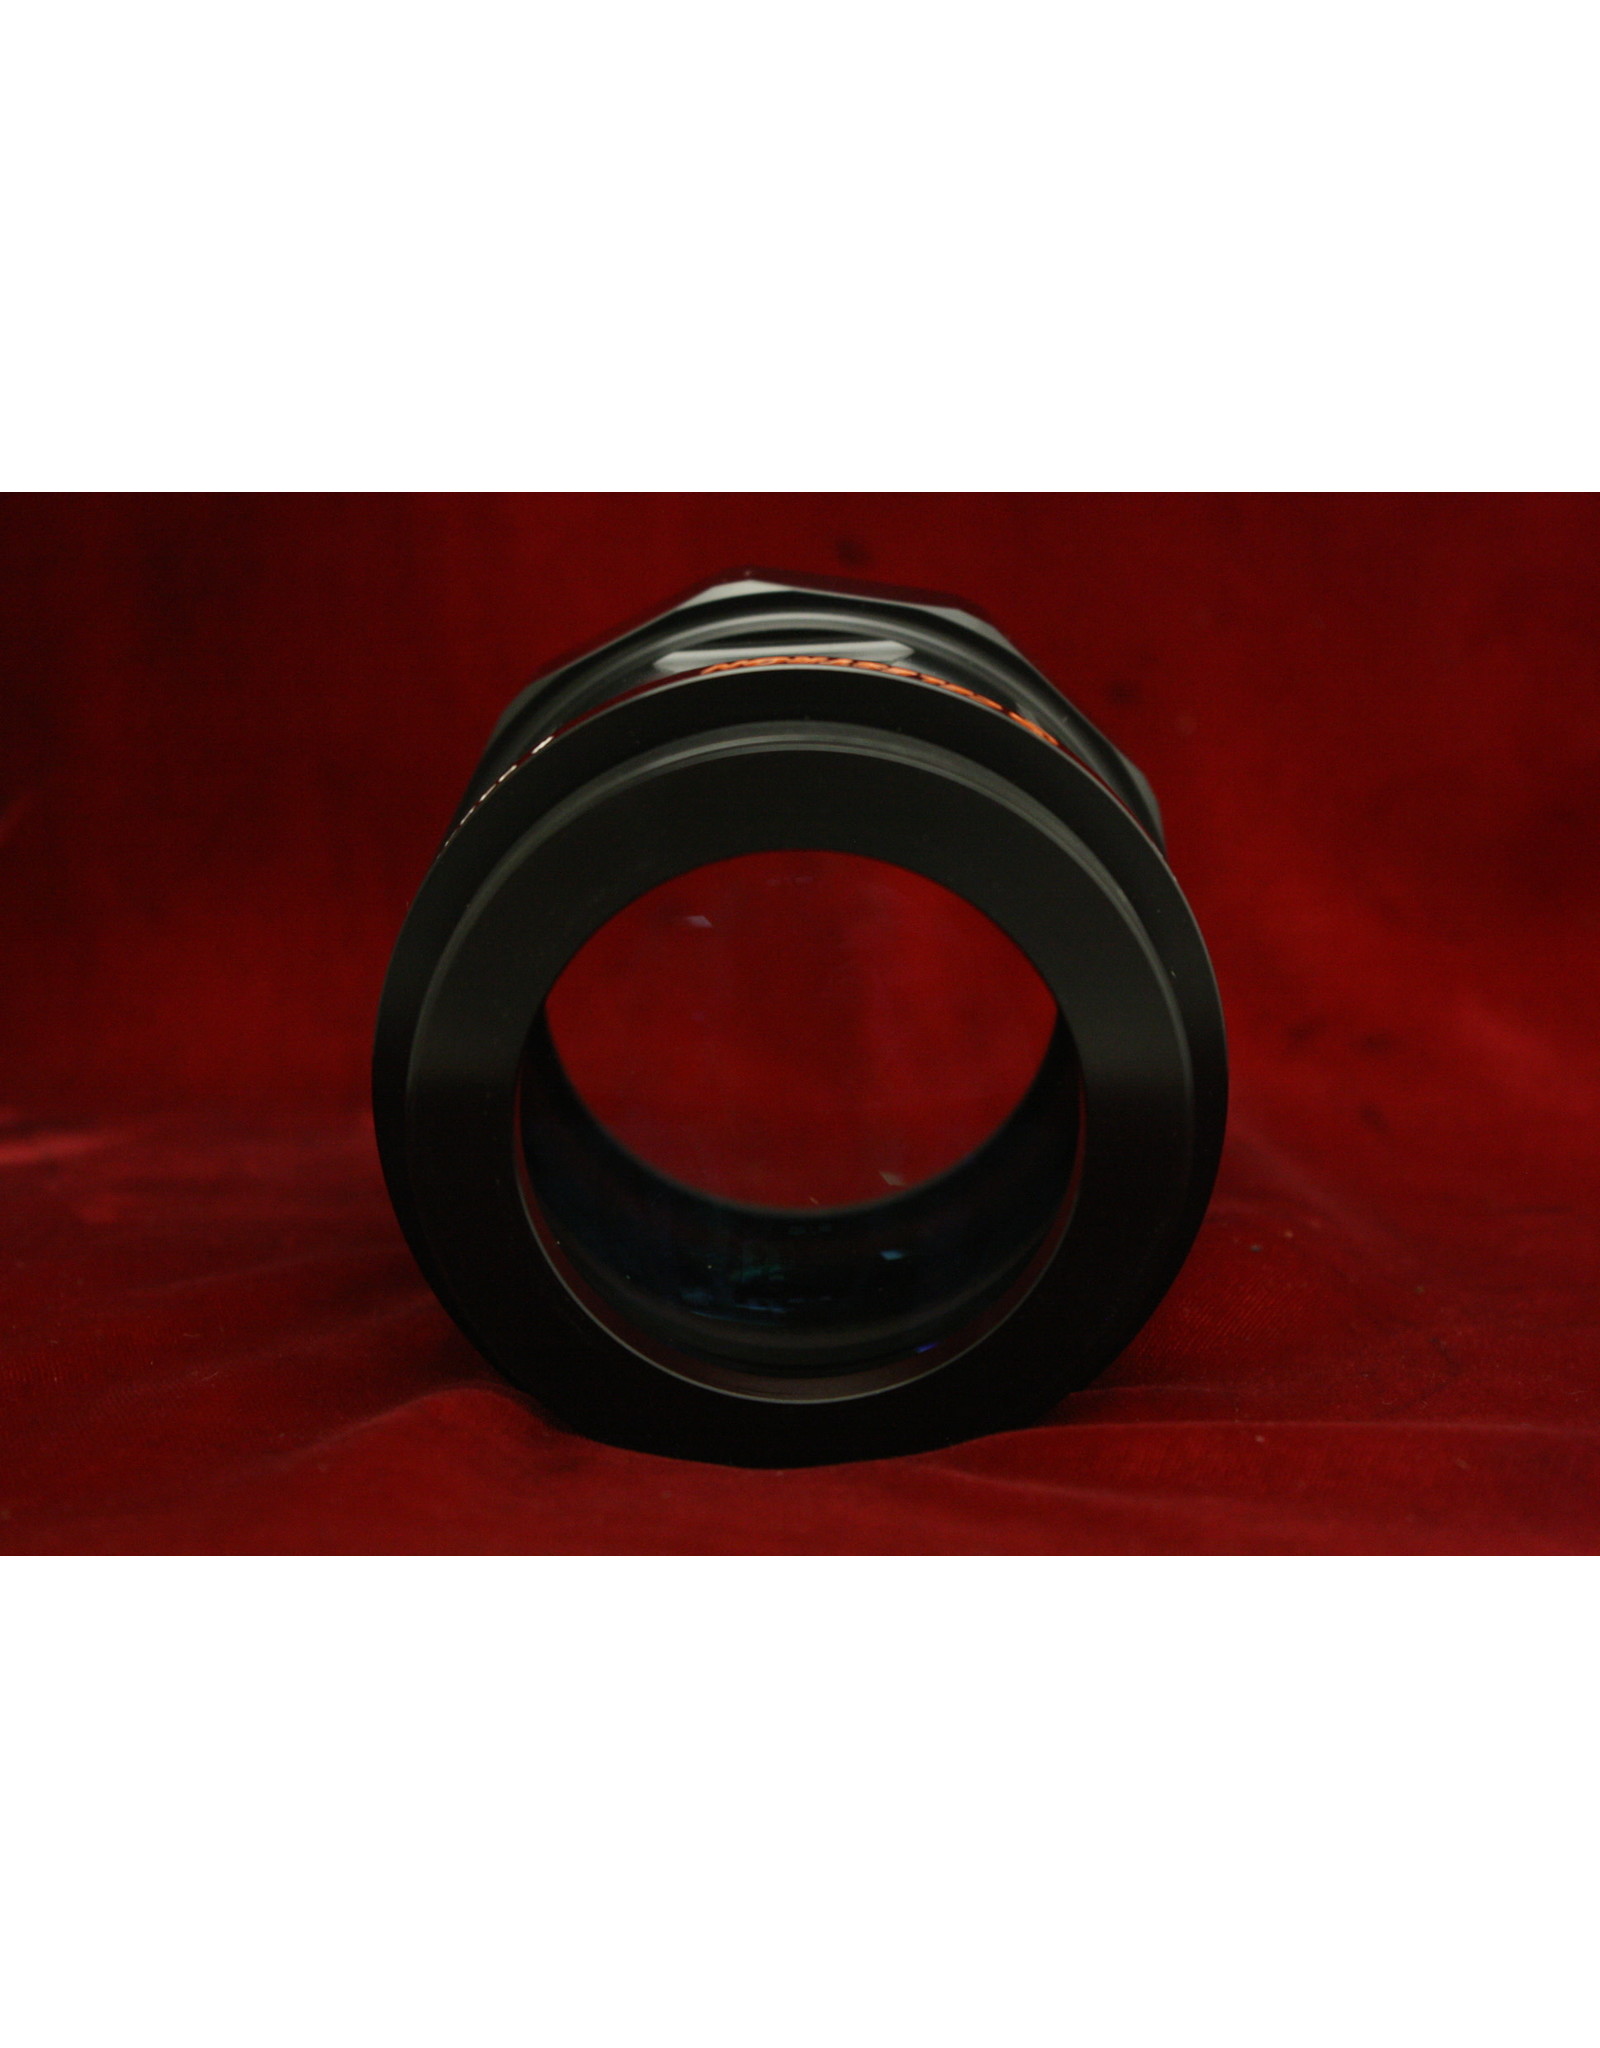 Celestron Celestron Reducer Lens .7x - EdgeHD 1400 (Pre-owned)